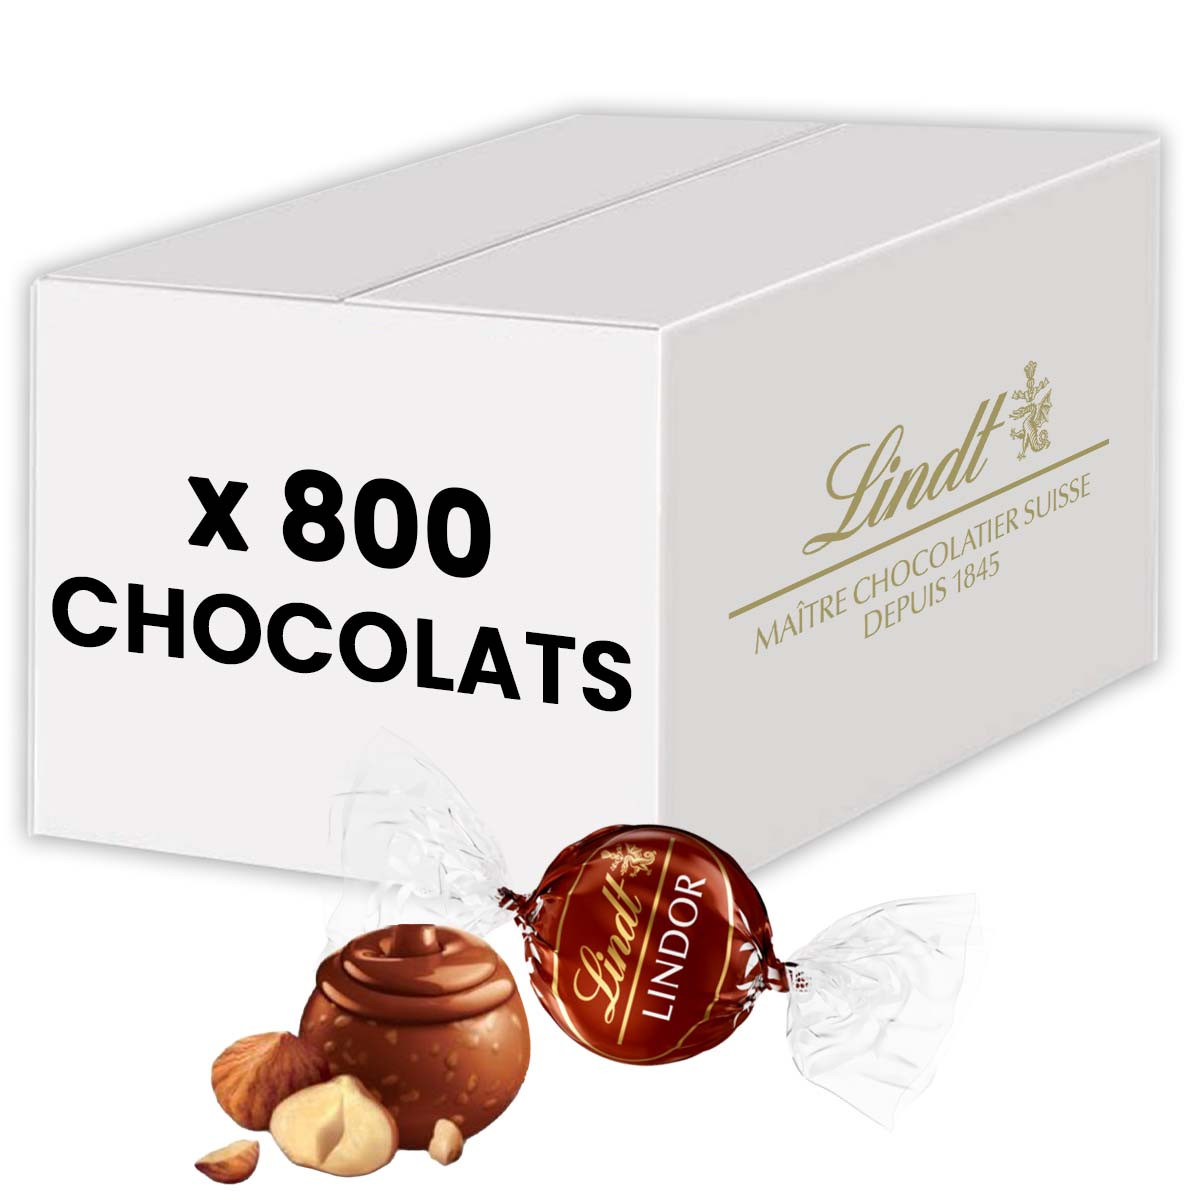 Sachet Assortiment de mini chocolats SWISS CLASSIC de Lindt, 500g